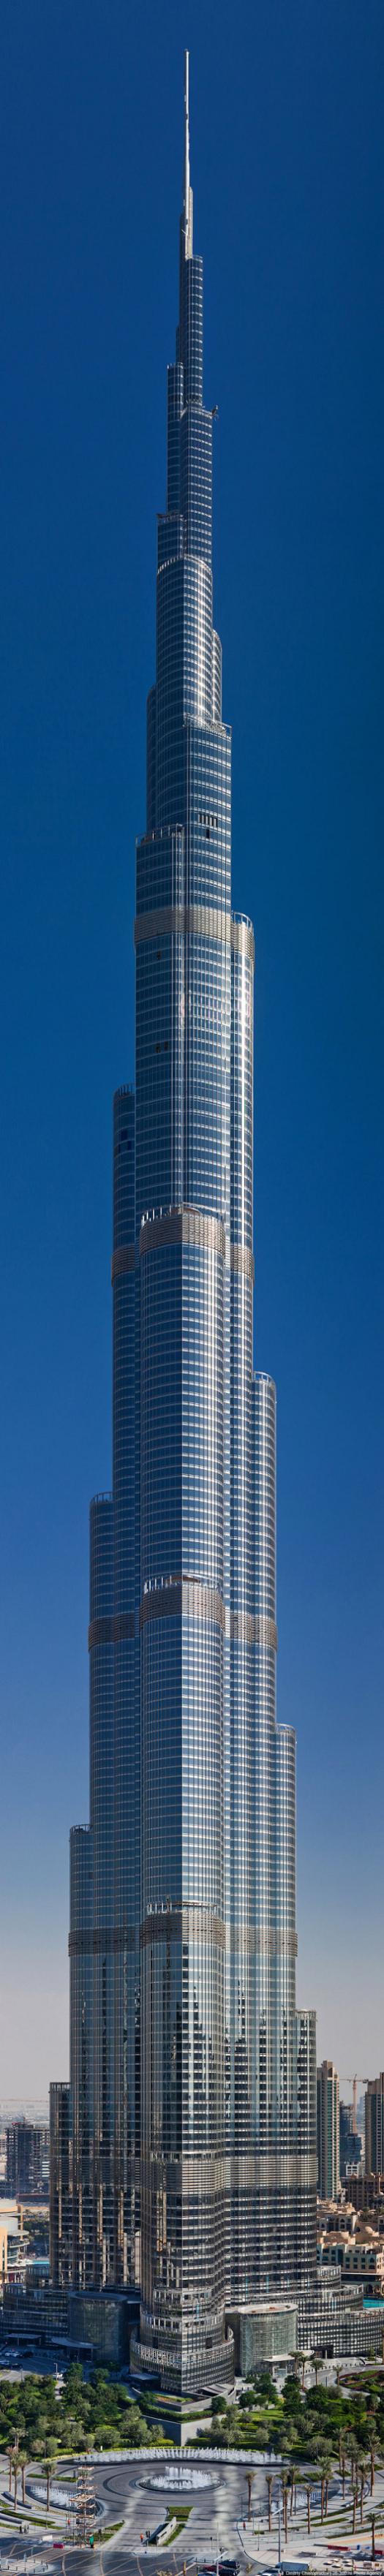 525x3523, 235 Kb / небоскрёб, Дубай, Бурдж-Халифа